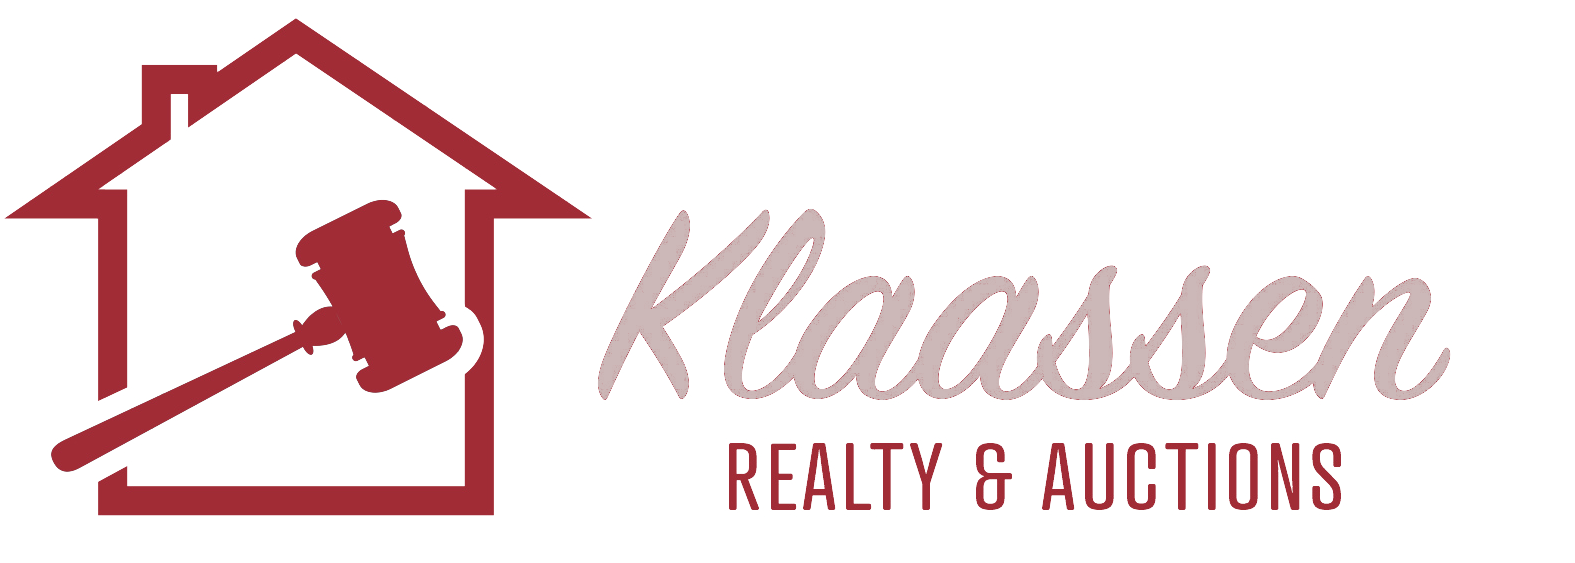 Klaassen Realty and Auction logo